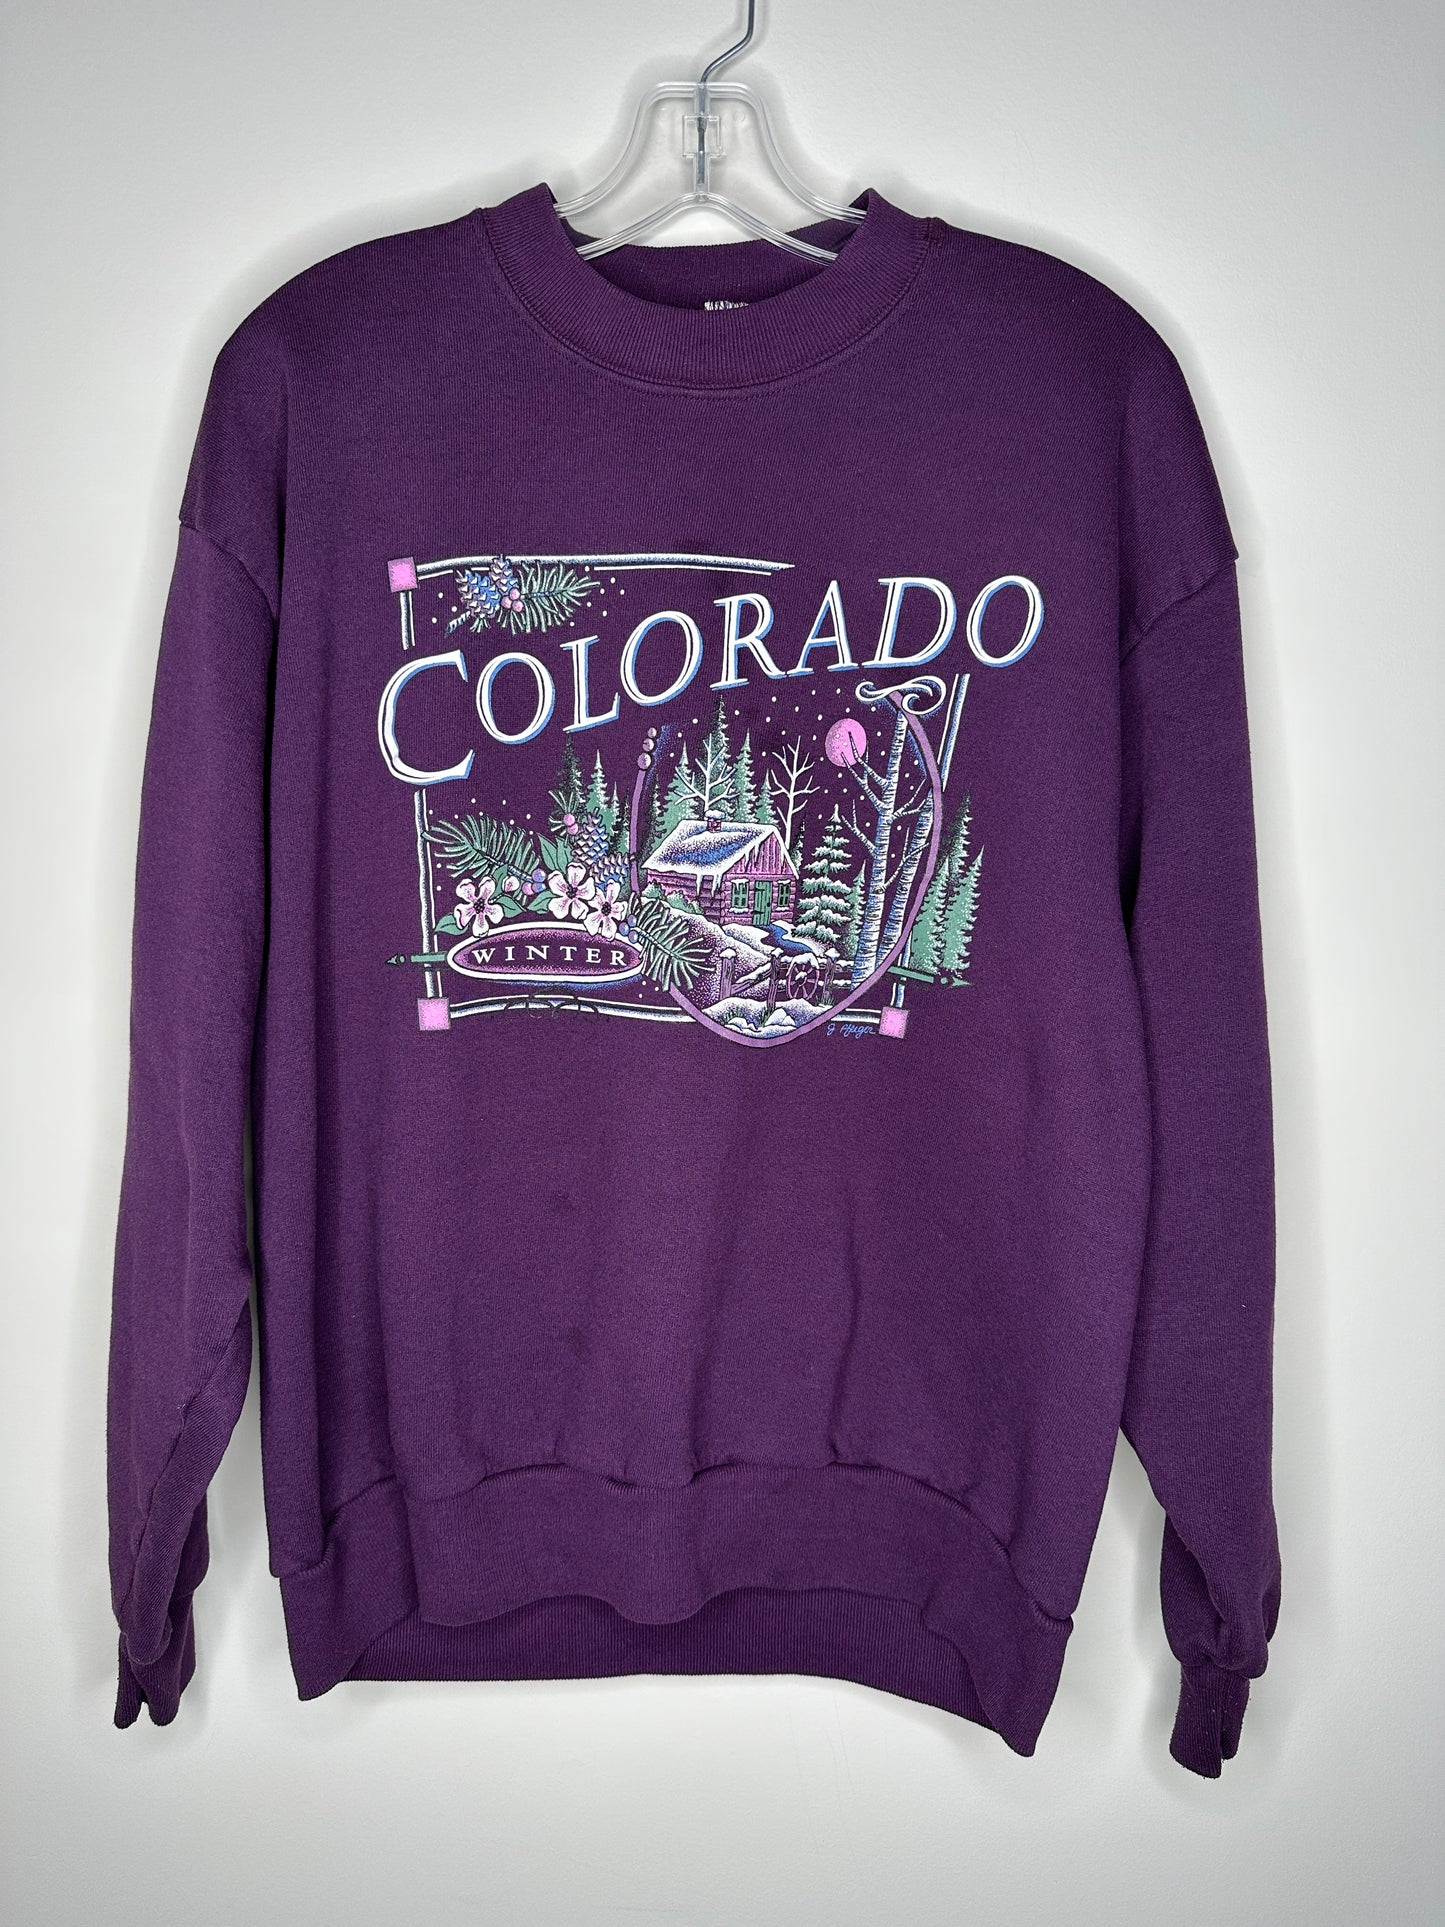 Jerzees Unisex Size L Purple "Colorado" Fleece Crew Neck Sweatshirt, Vintage